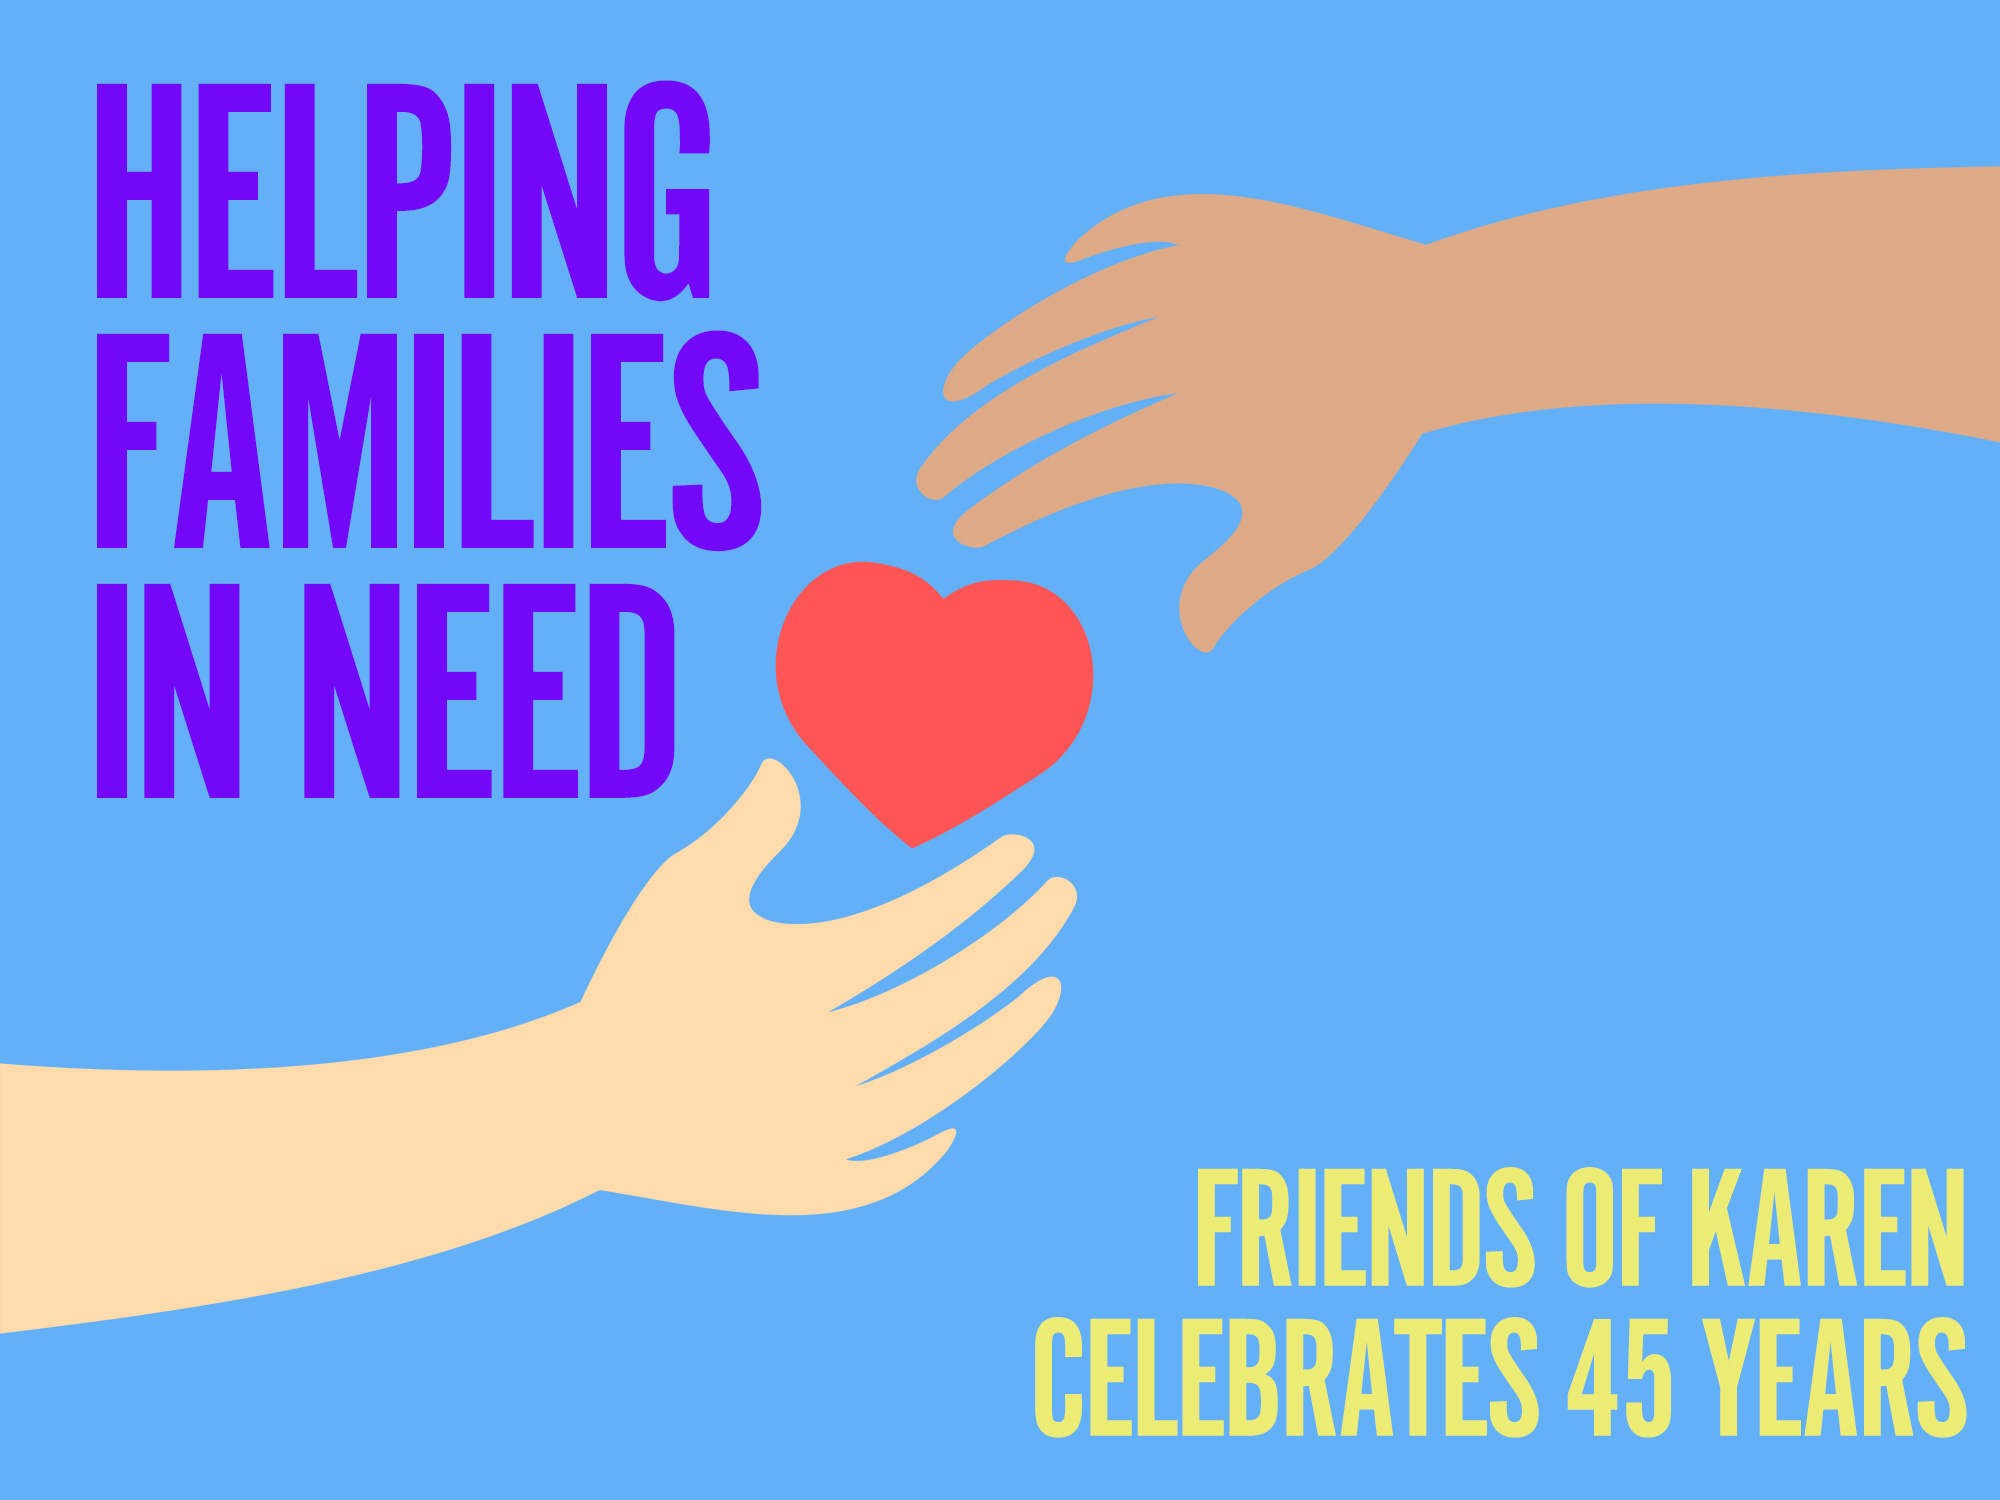 Friends of Karen: 45 Years of Helping Families in Need